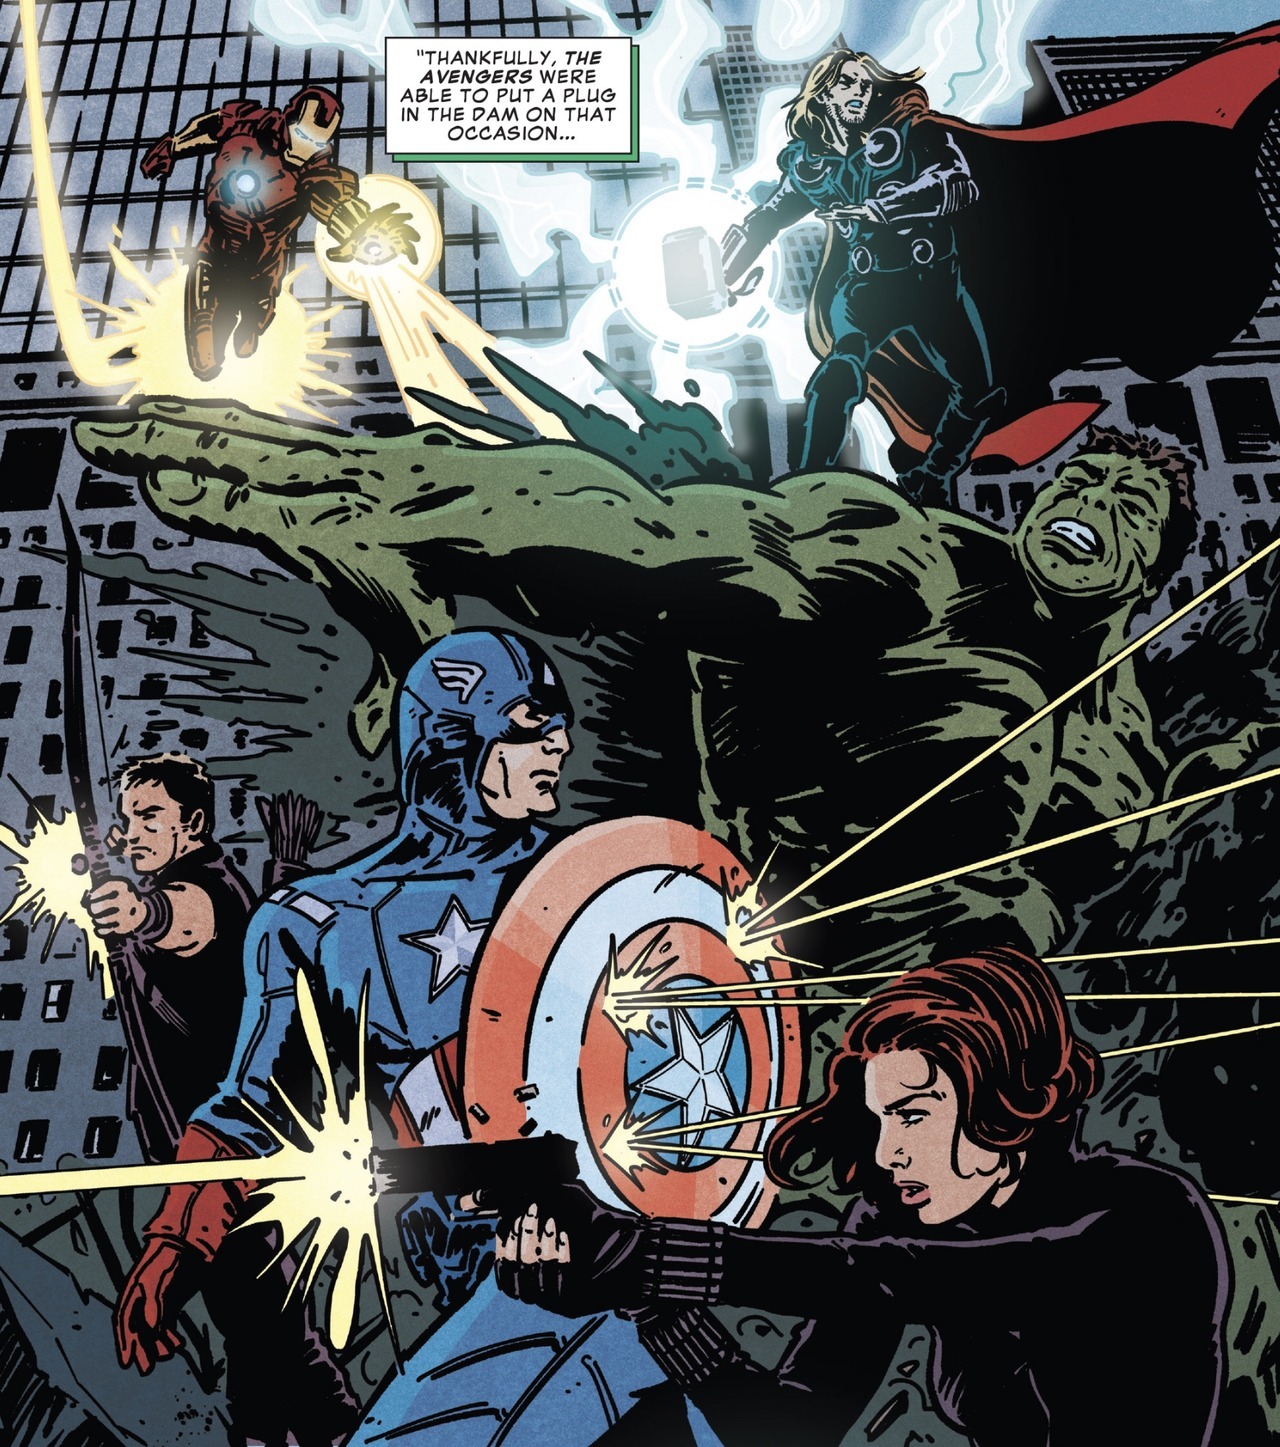 Marvel's Avengers: Infinity War Prelude (2018), Comic Series